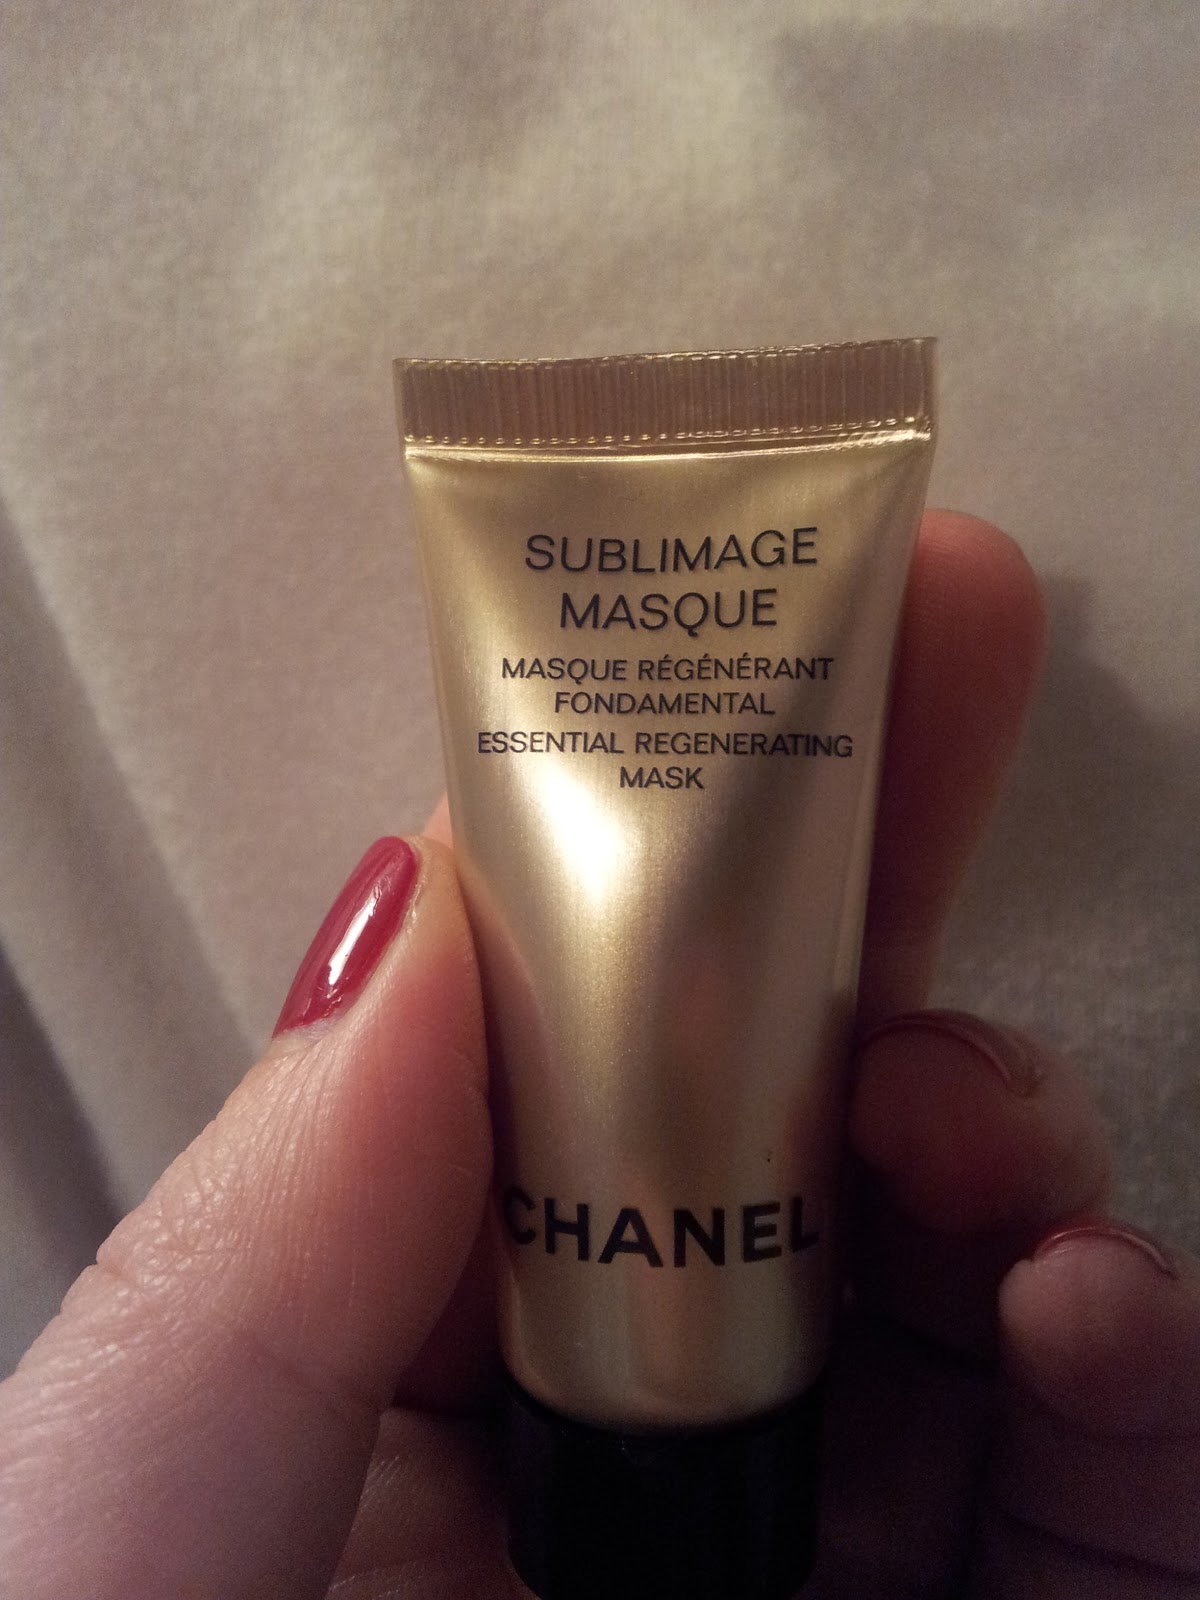 LondonBeauty: Review: Chanel Sublimage Masque Essential Regenerating Mask